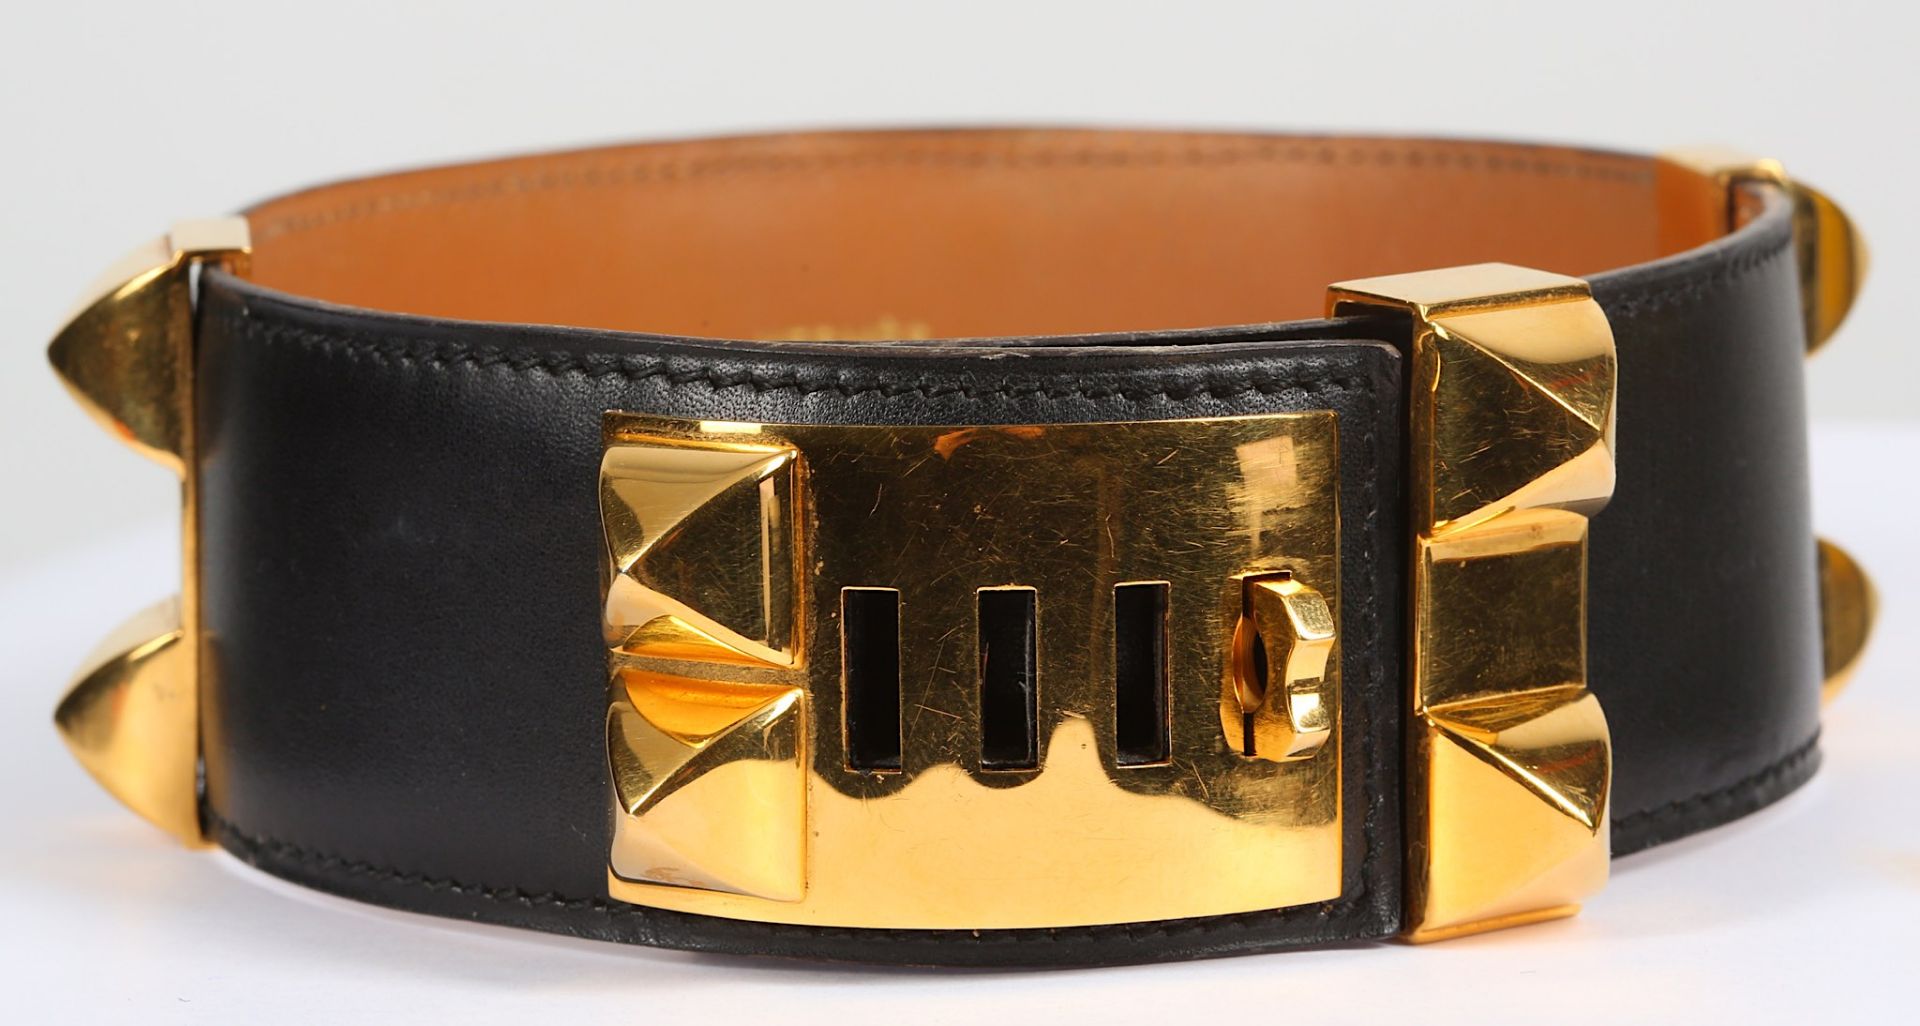 Hermes Collier de Chien Necklace, c. 2000, black box leather with gold plated hardware, 4cm wide, - Bild 2 aus 3